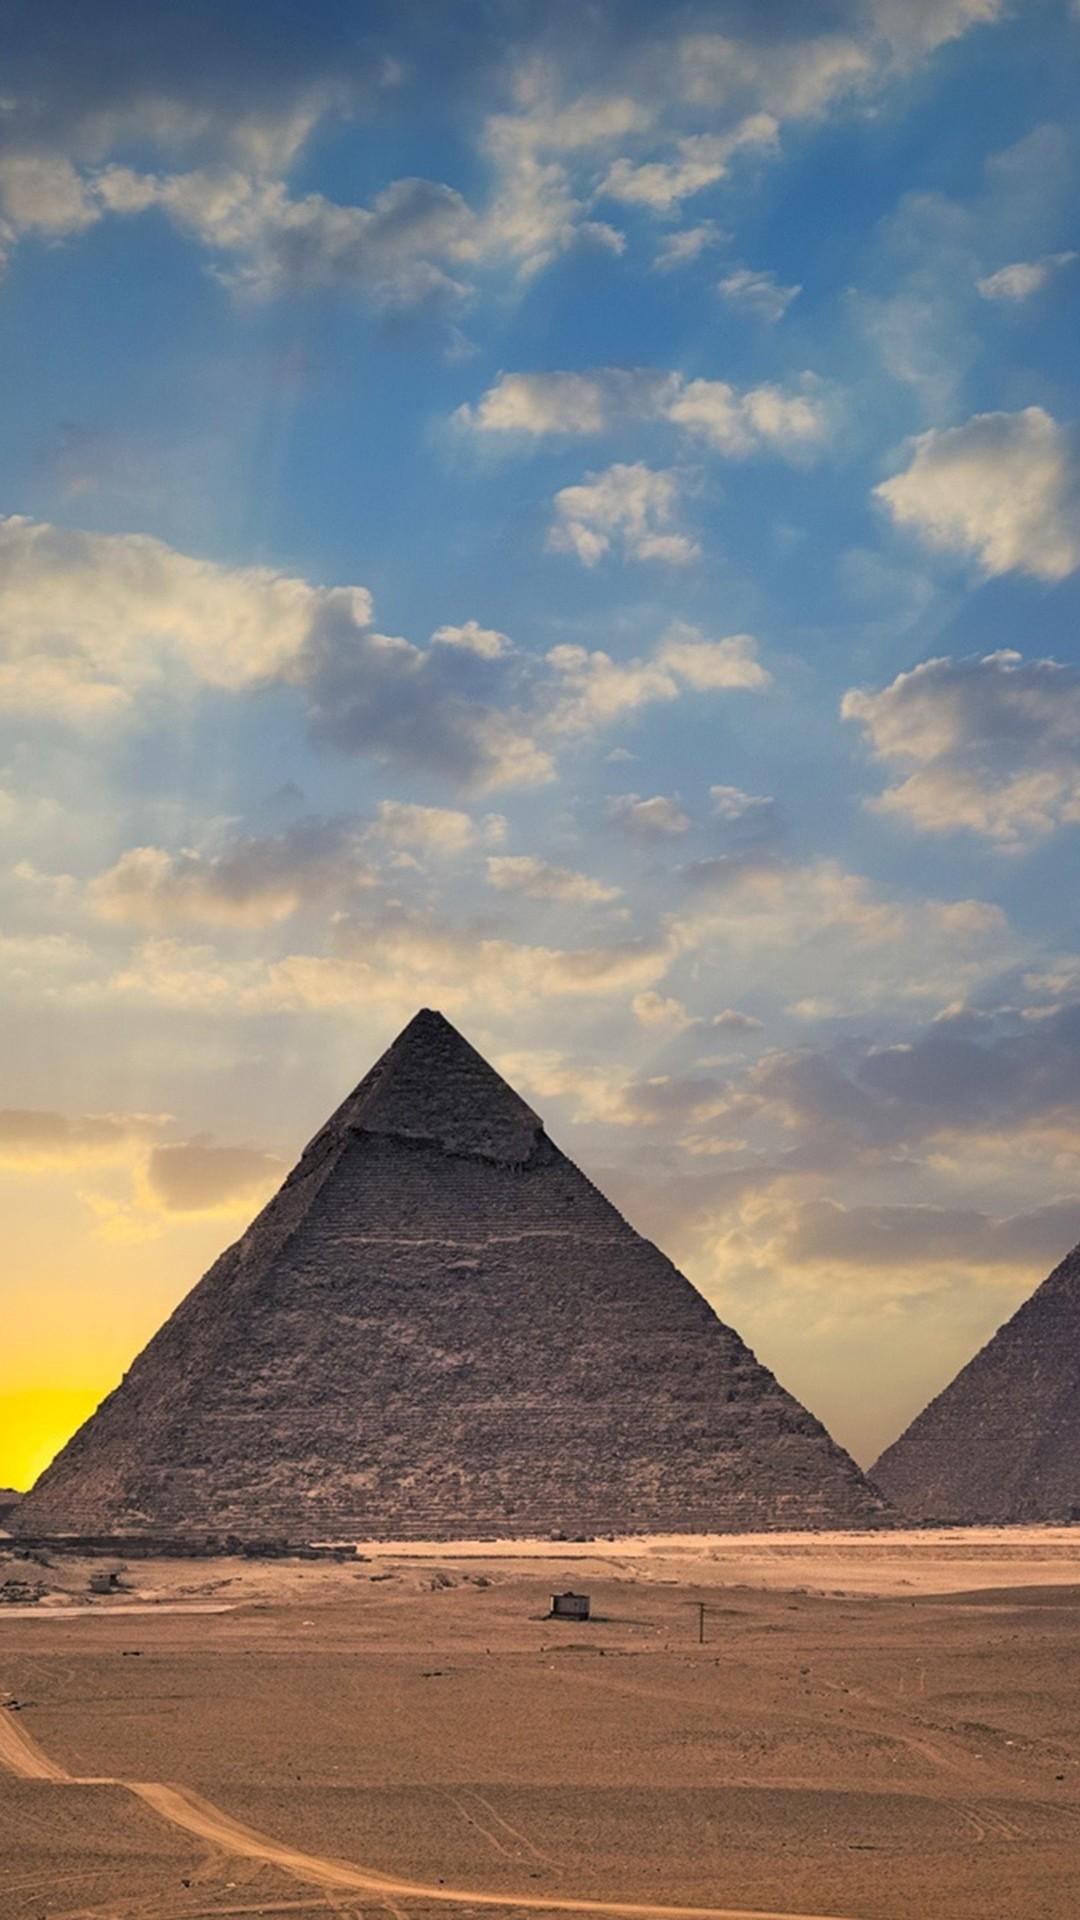 Egypt Pyramids 4k Ultra HD Wallpaper Wallpaper iPhone X